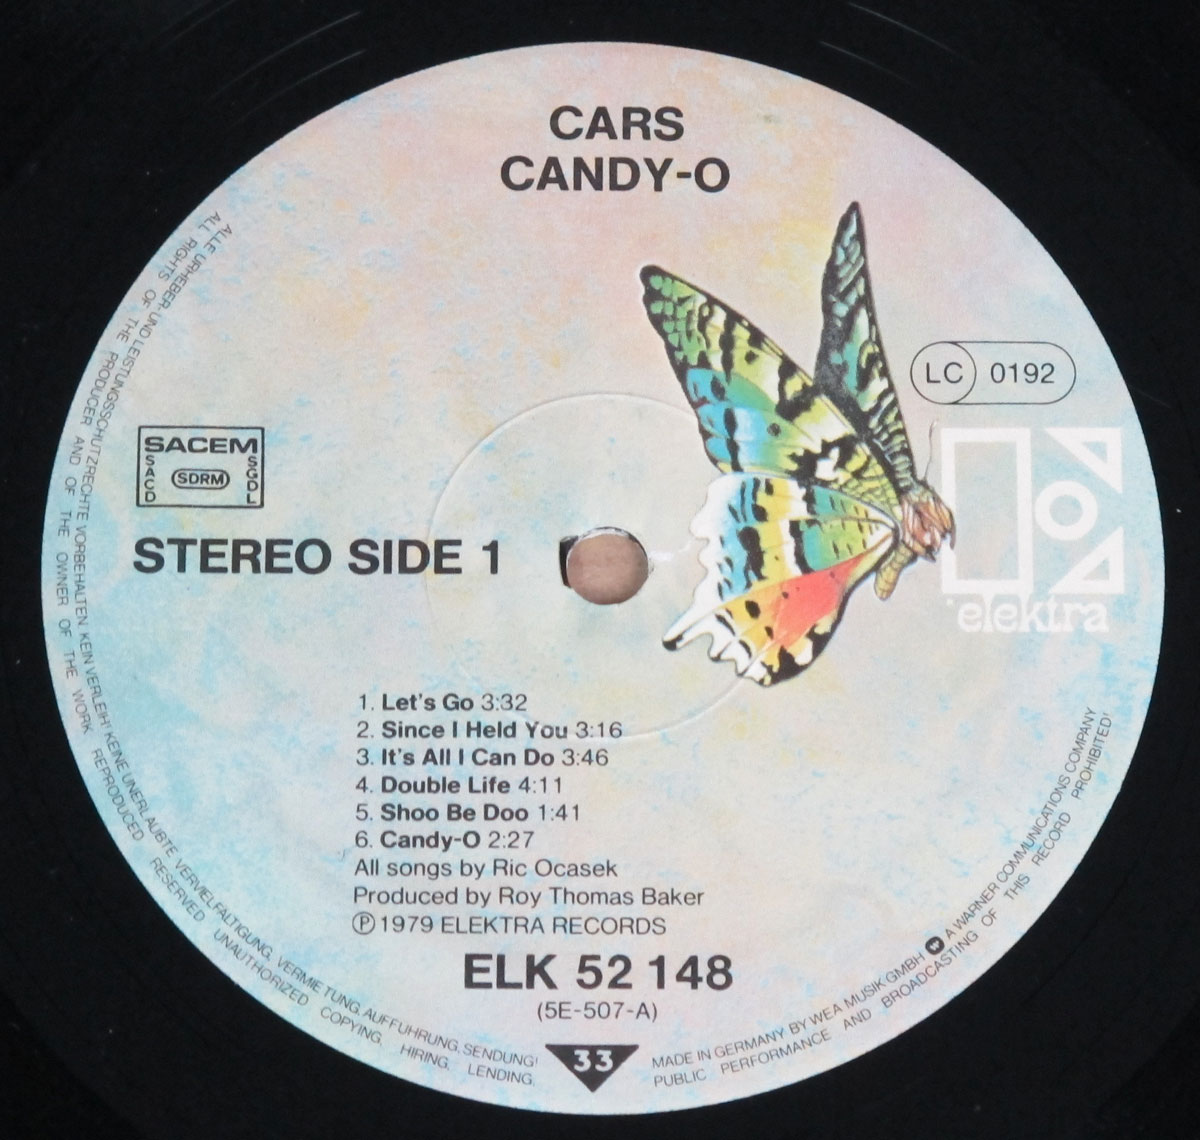 THE CARS CandyO New Wave, 80s PopRock Vinyl Album Gallery vinylrecords